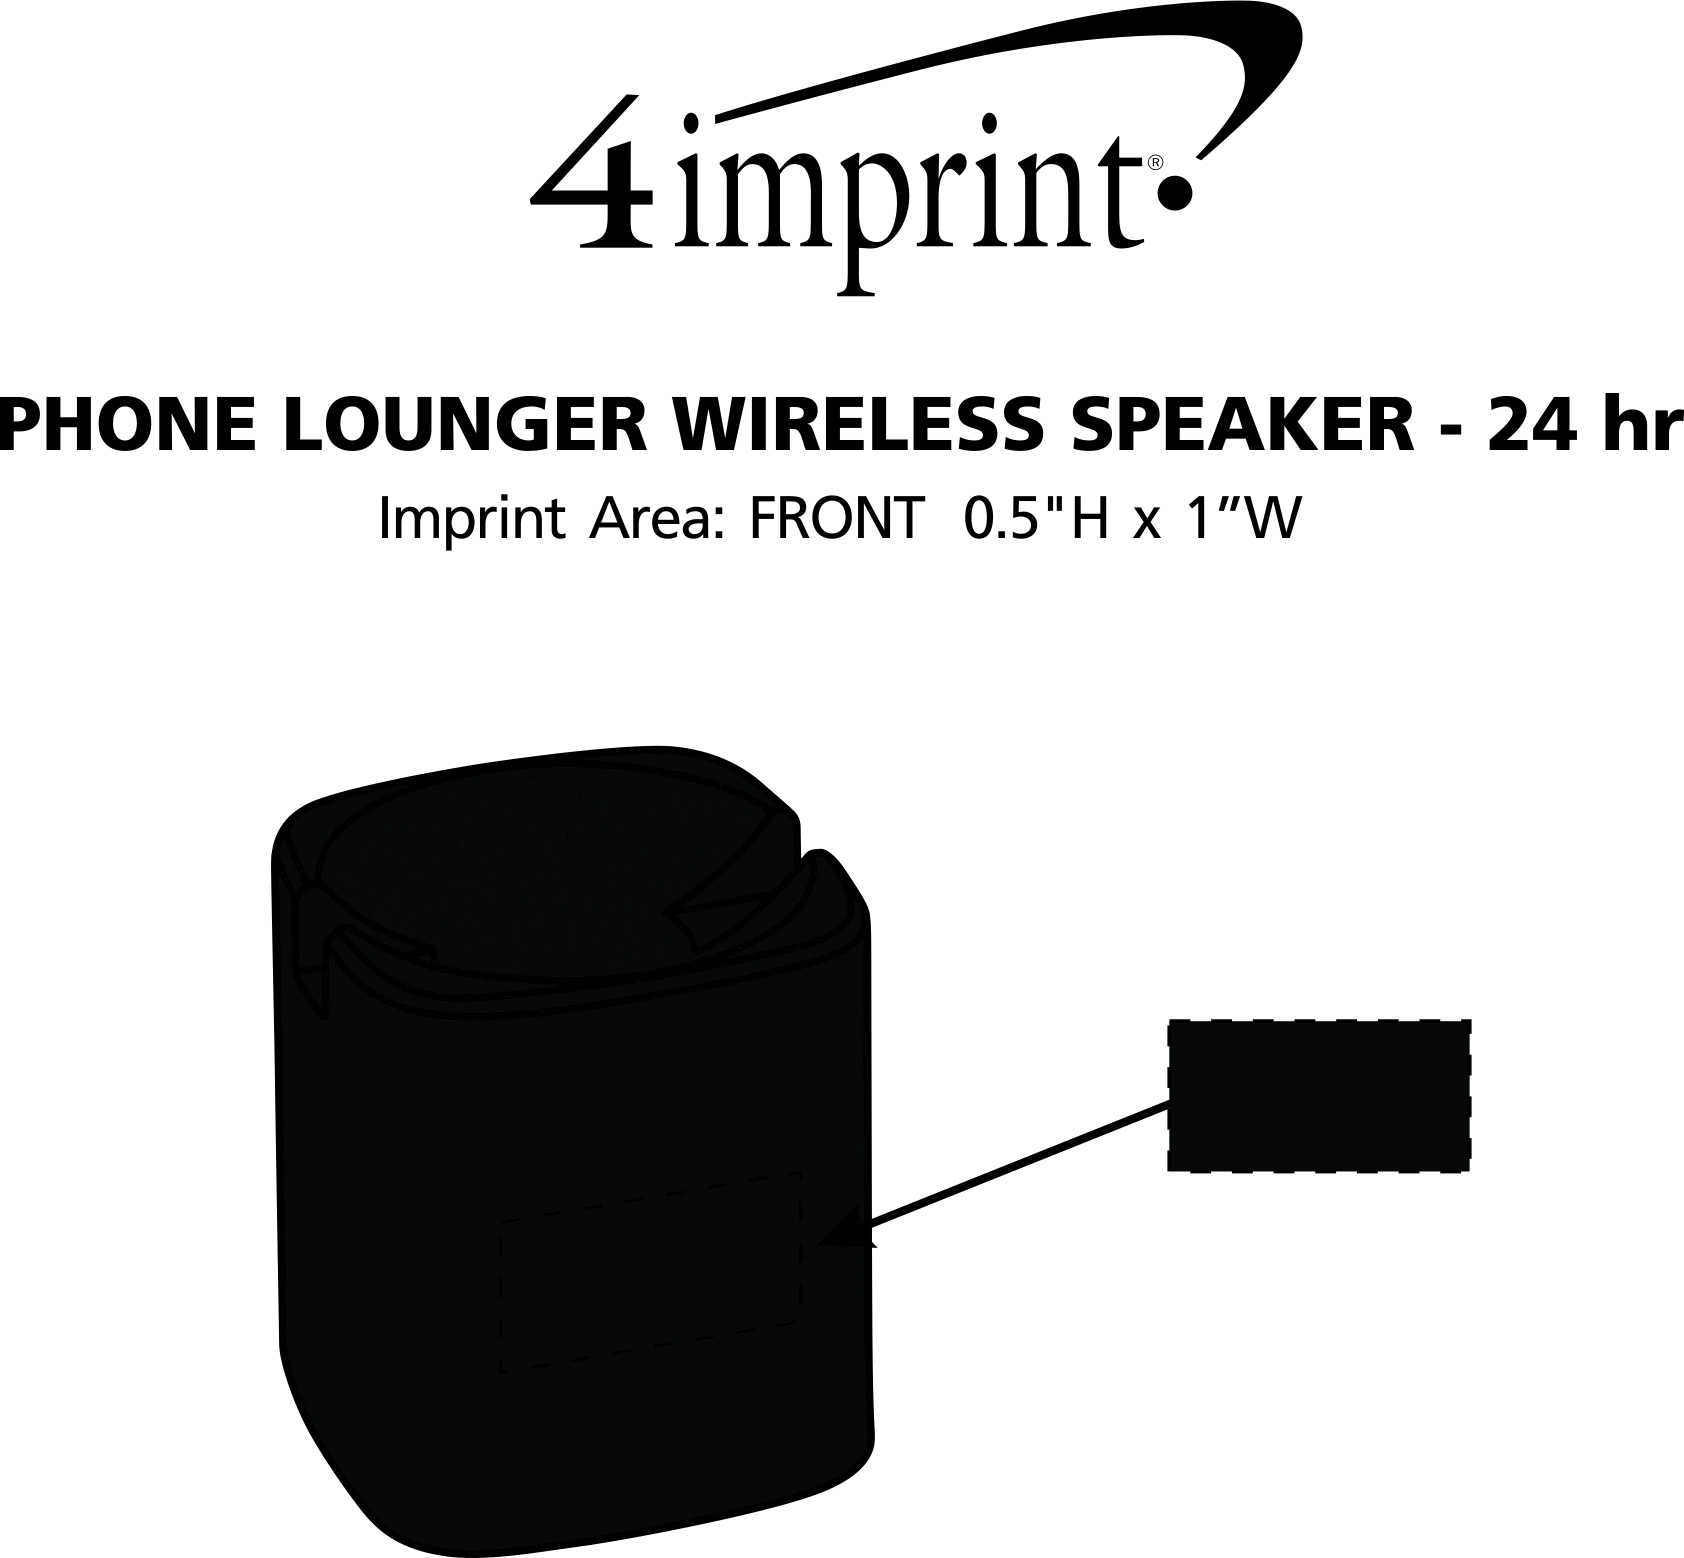 Imprint Area of Phone Lounger Wireless Speaker - 24 hr